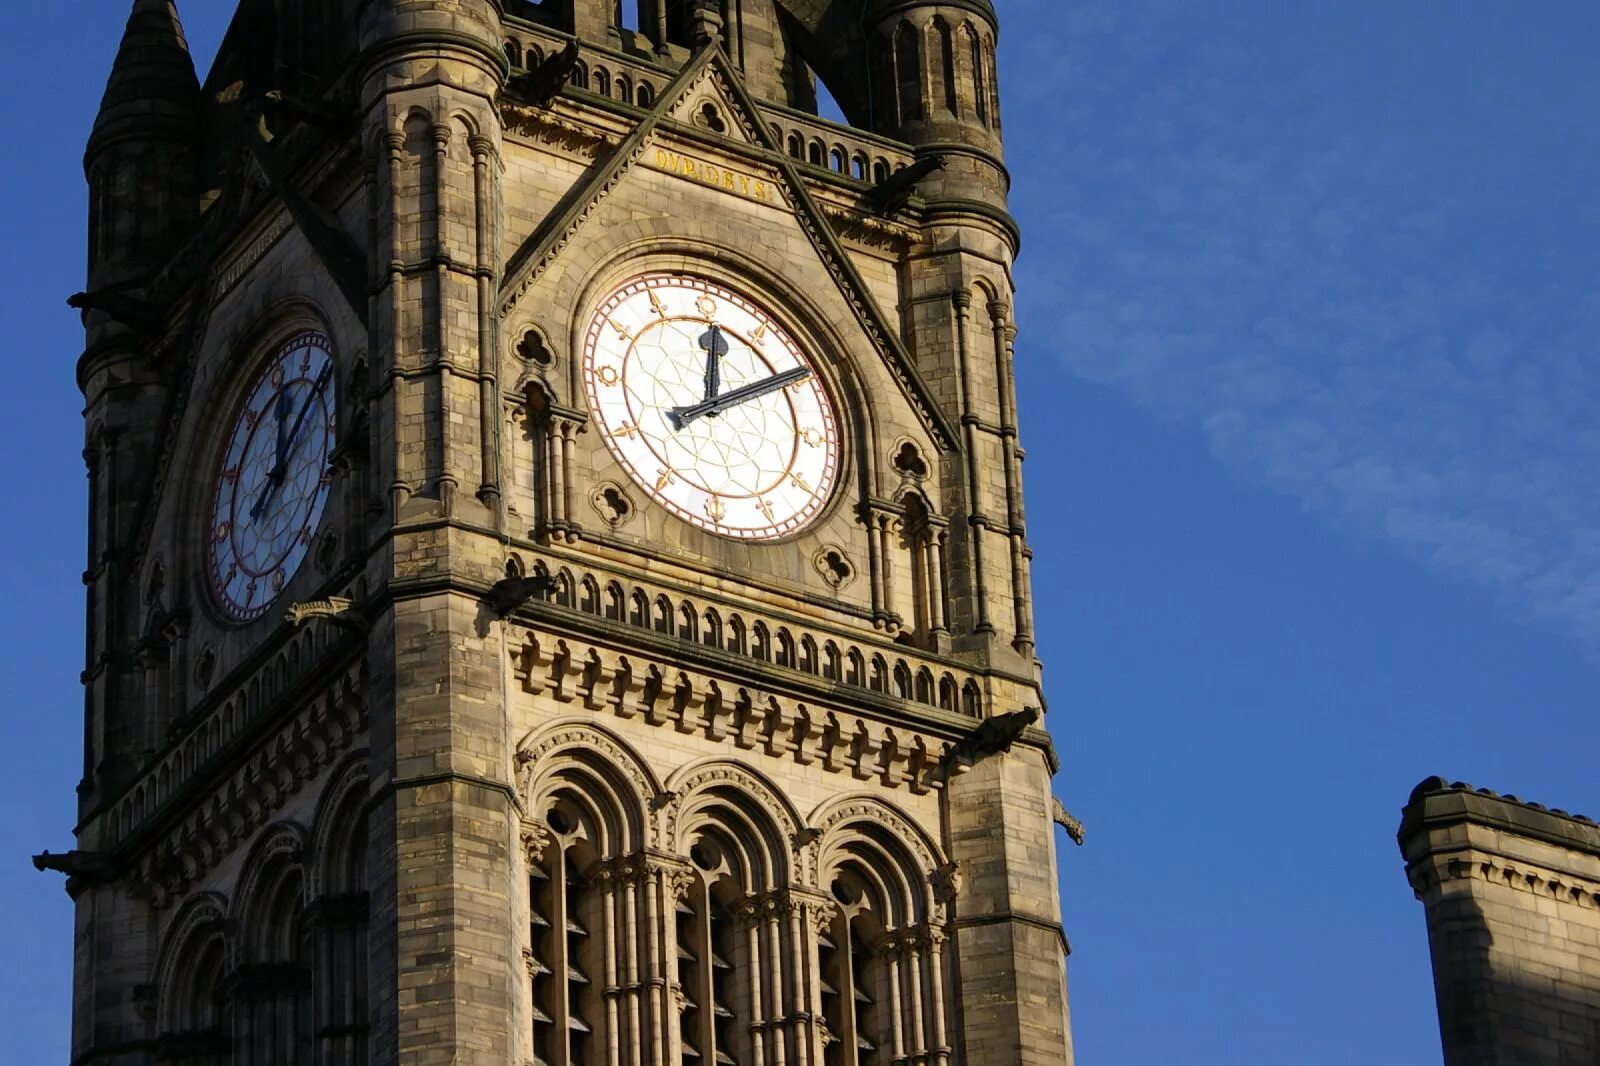 Башня 1 час. Клок Тауэр. Часовая башня Святого марка. Часы на башне Тауэр. Манчестерская ратуша Манчестер.